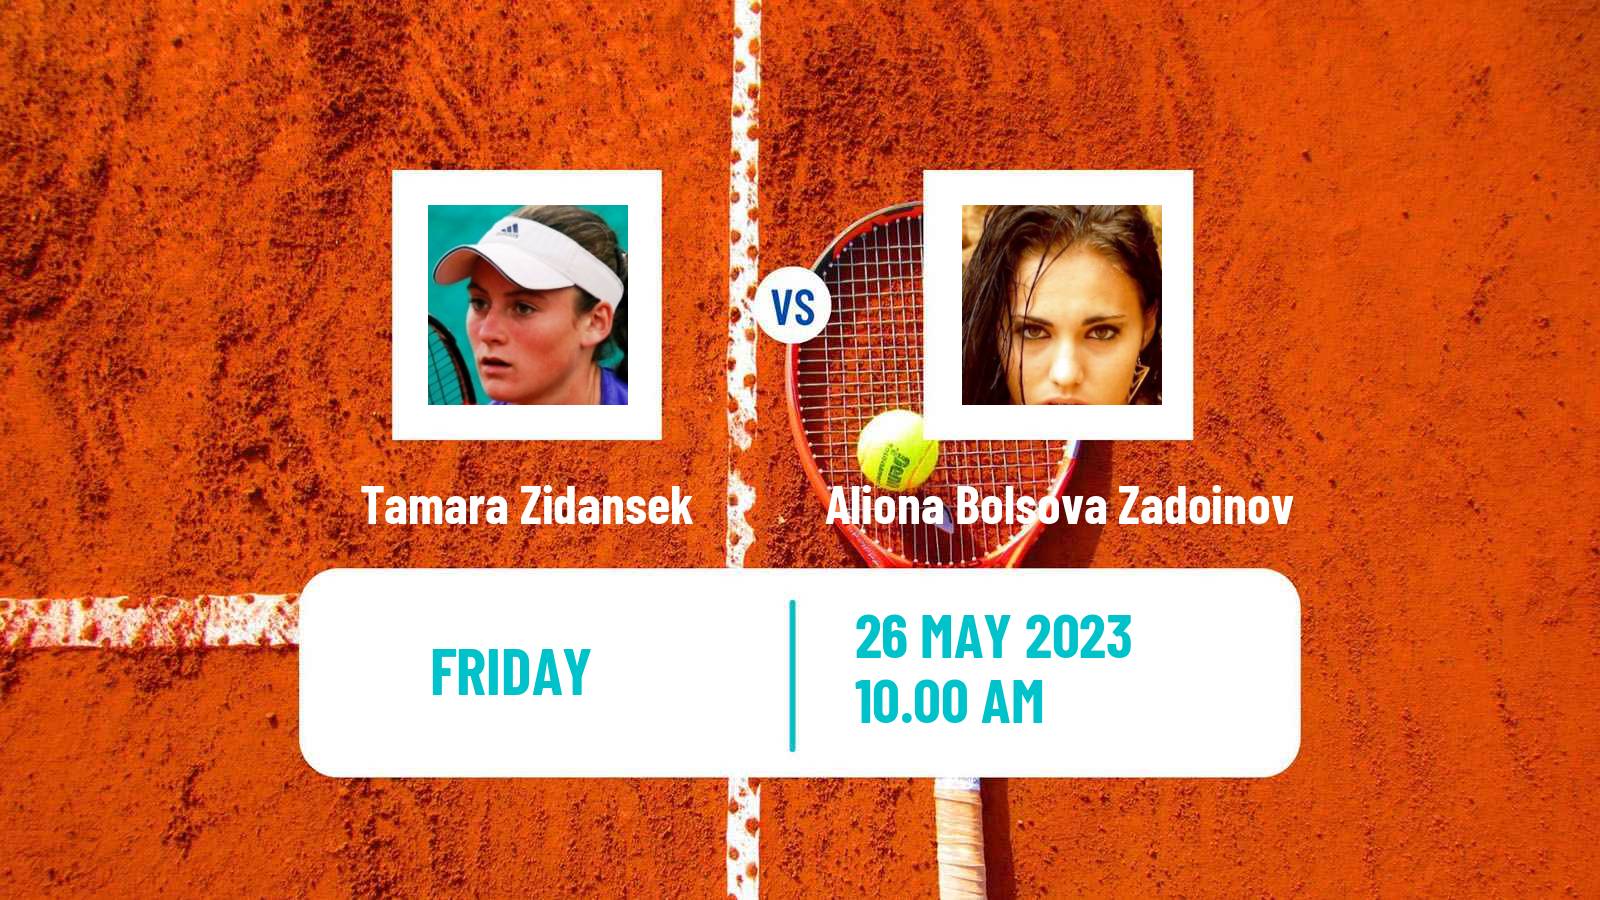 Tennis WTA Roland Garros Tamara Zidansek - Aliona Bolsova Zadoinov